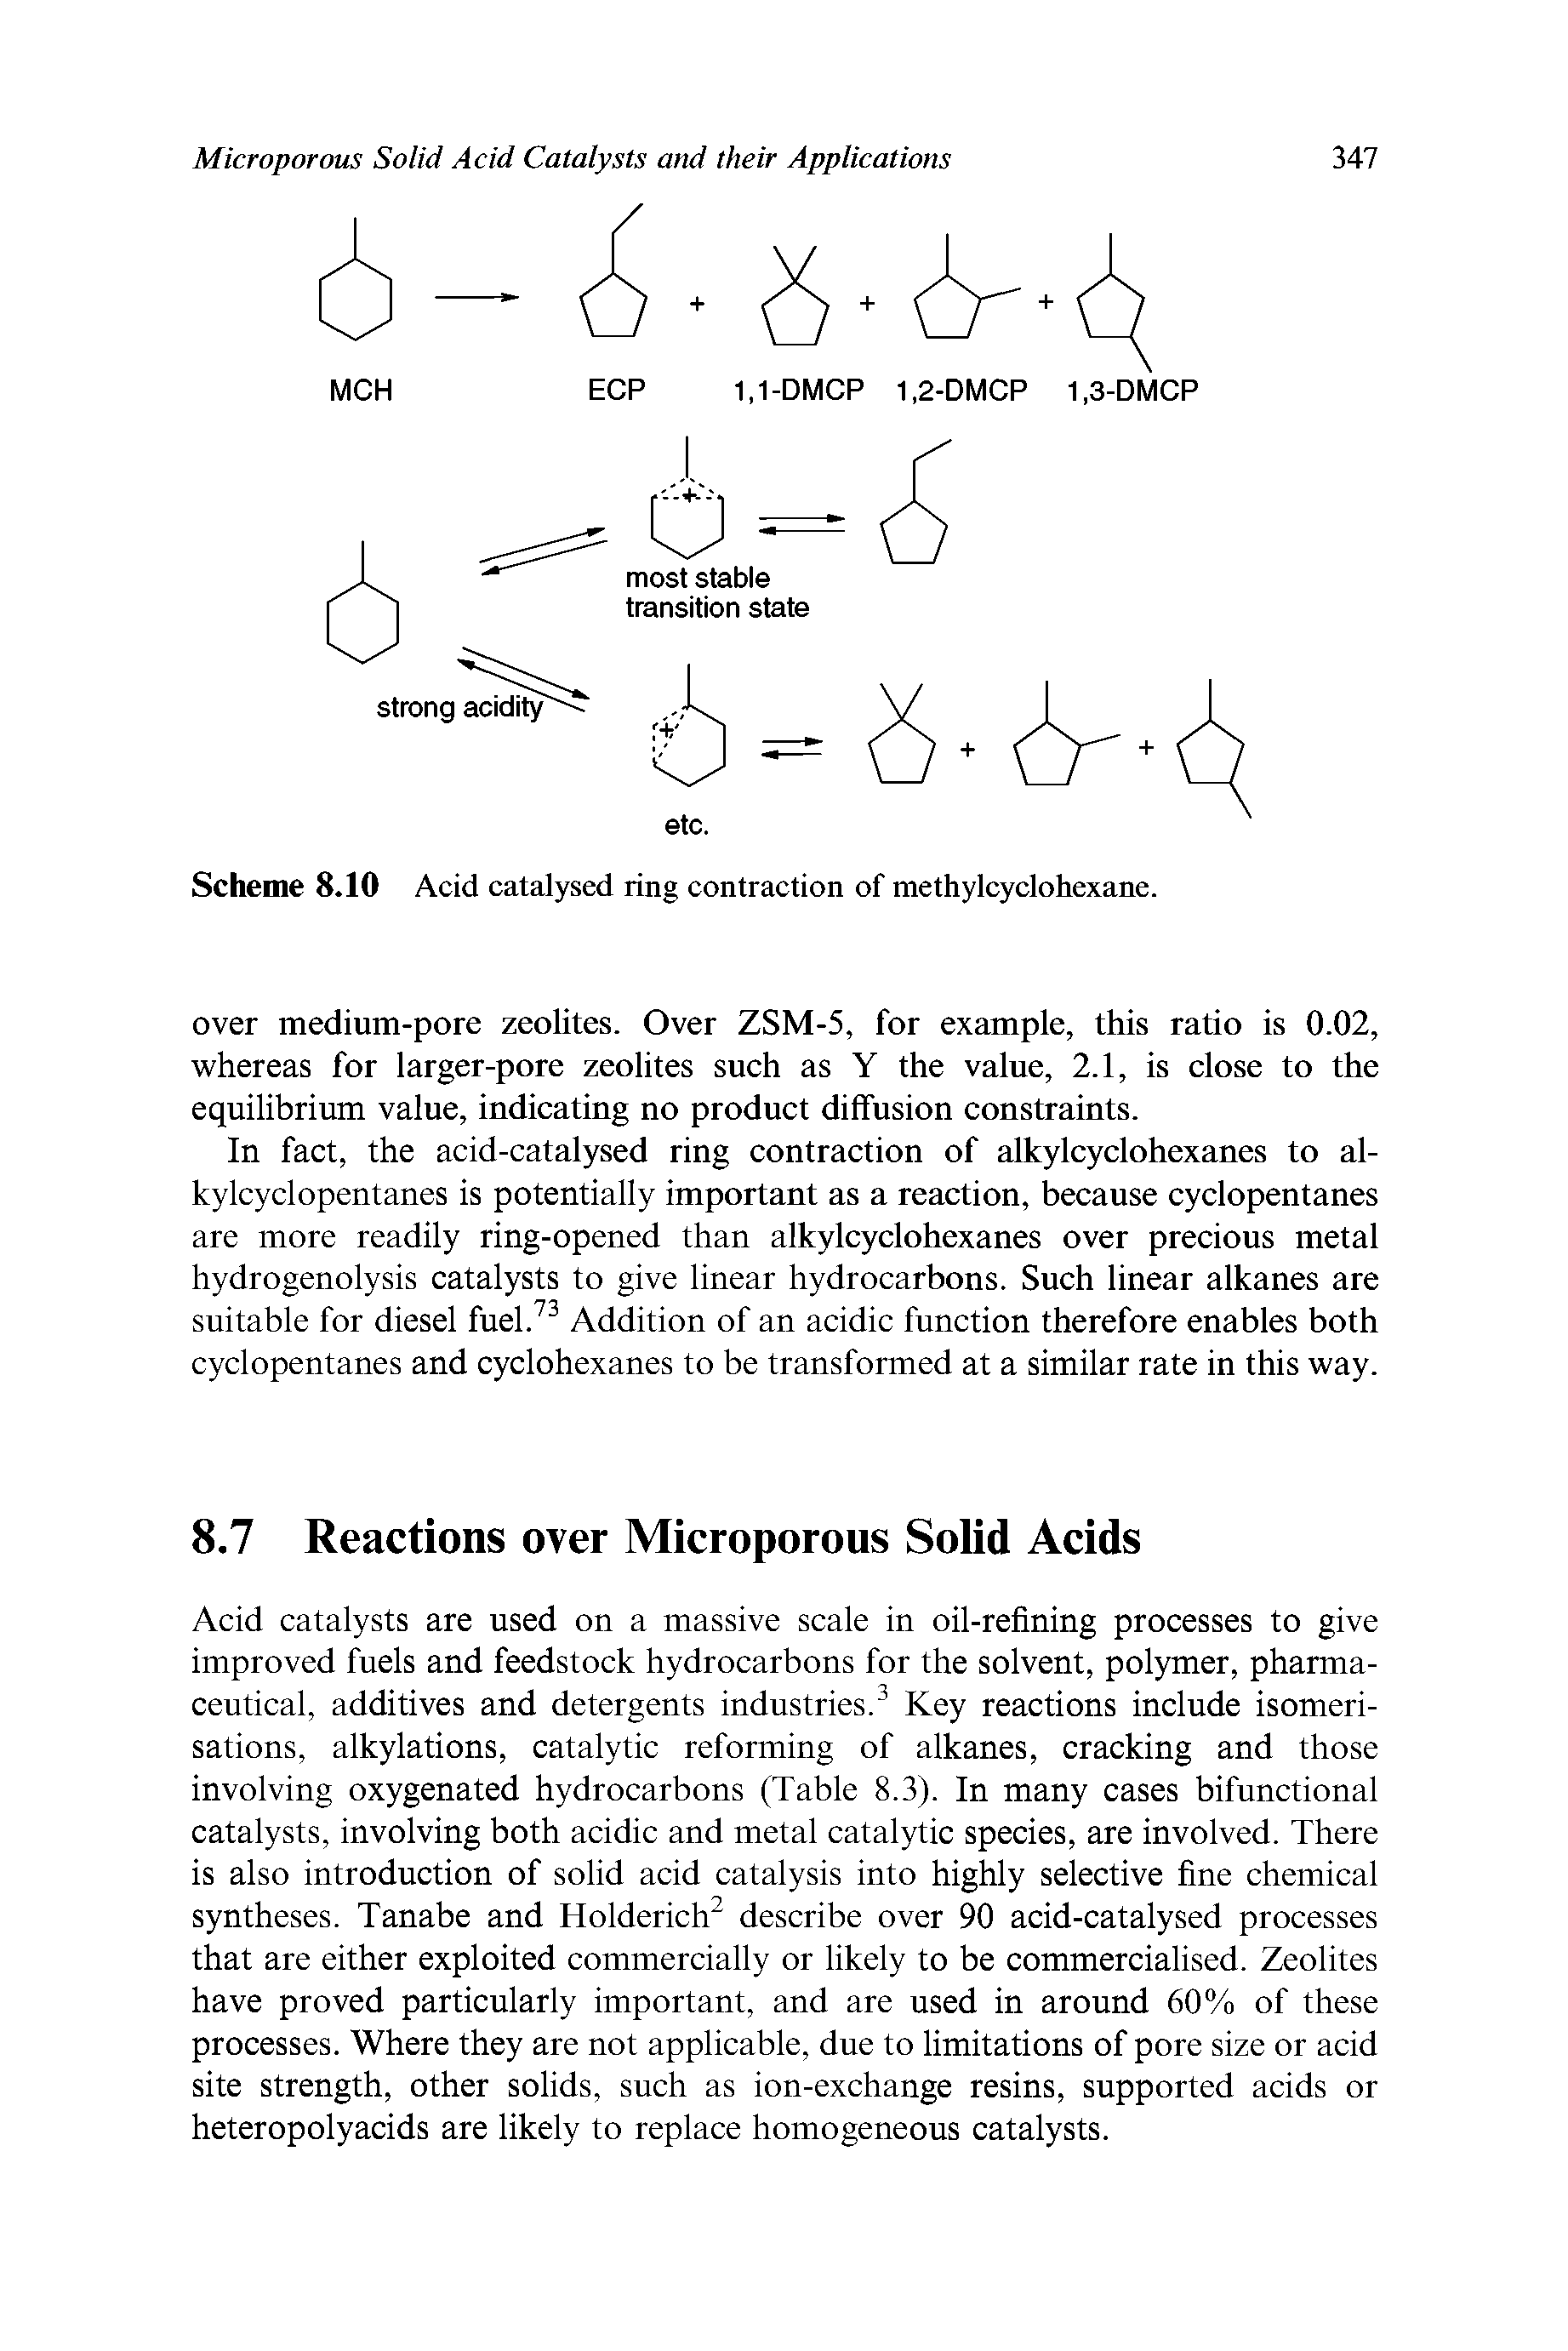 Scheme 8.10 Acid catalysed ring contraction of methylcyclohexane.